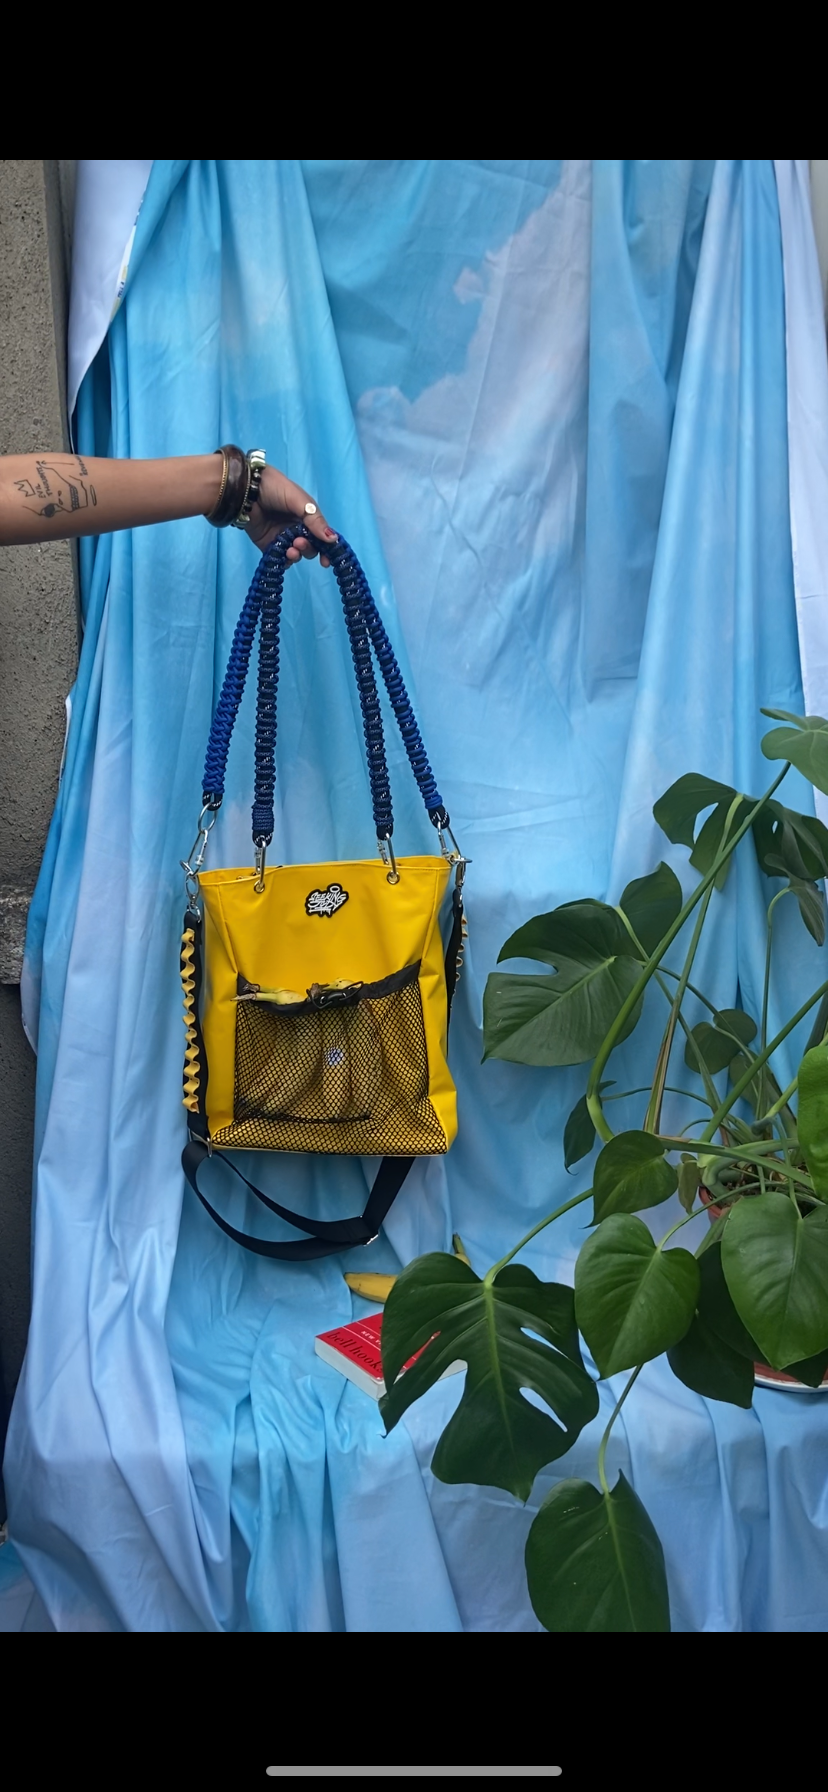 Waterproof tote yellow